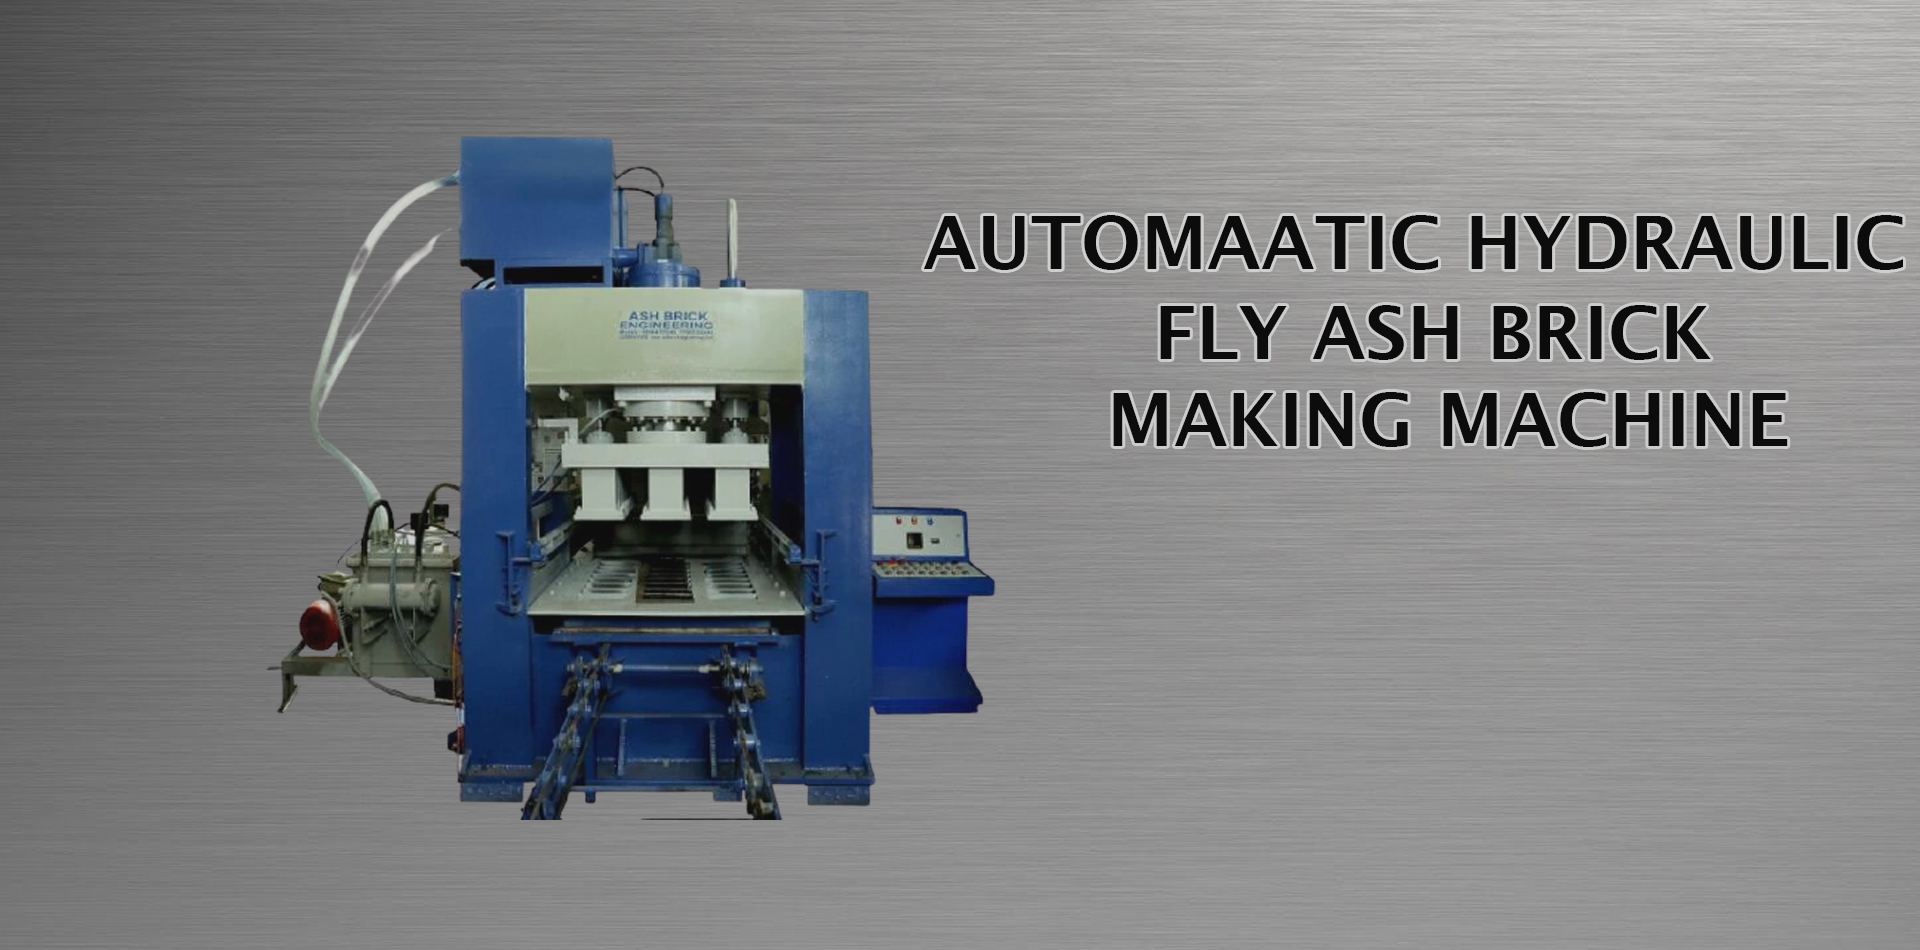 Fly Ash Brick Making Machine manufacturers